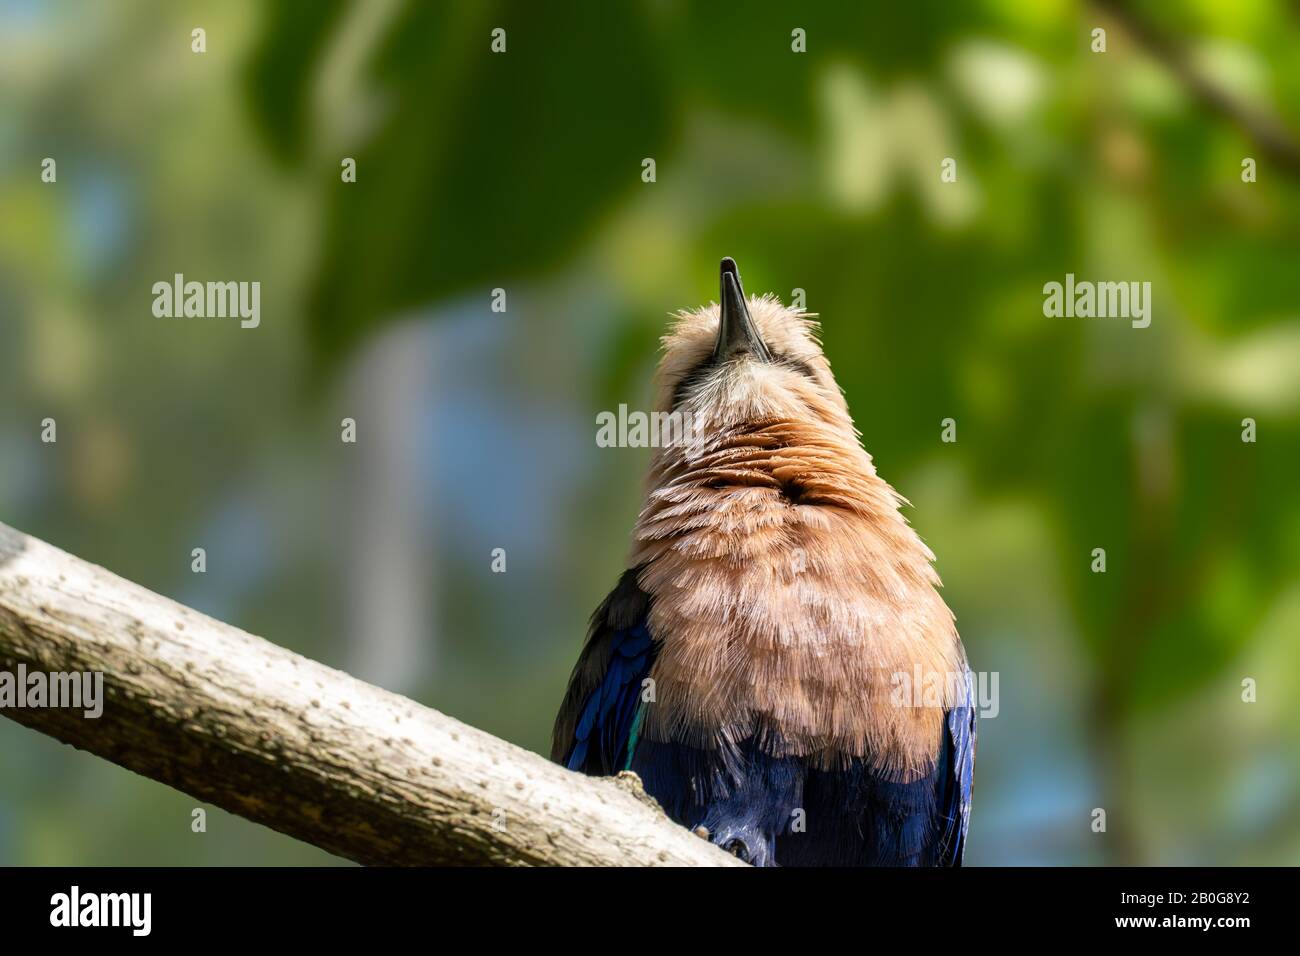 Blue-bellied roller bird in a tree branch Stock Photo